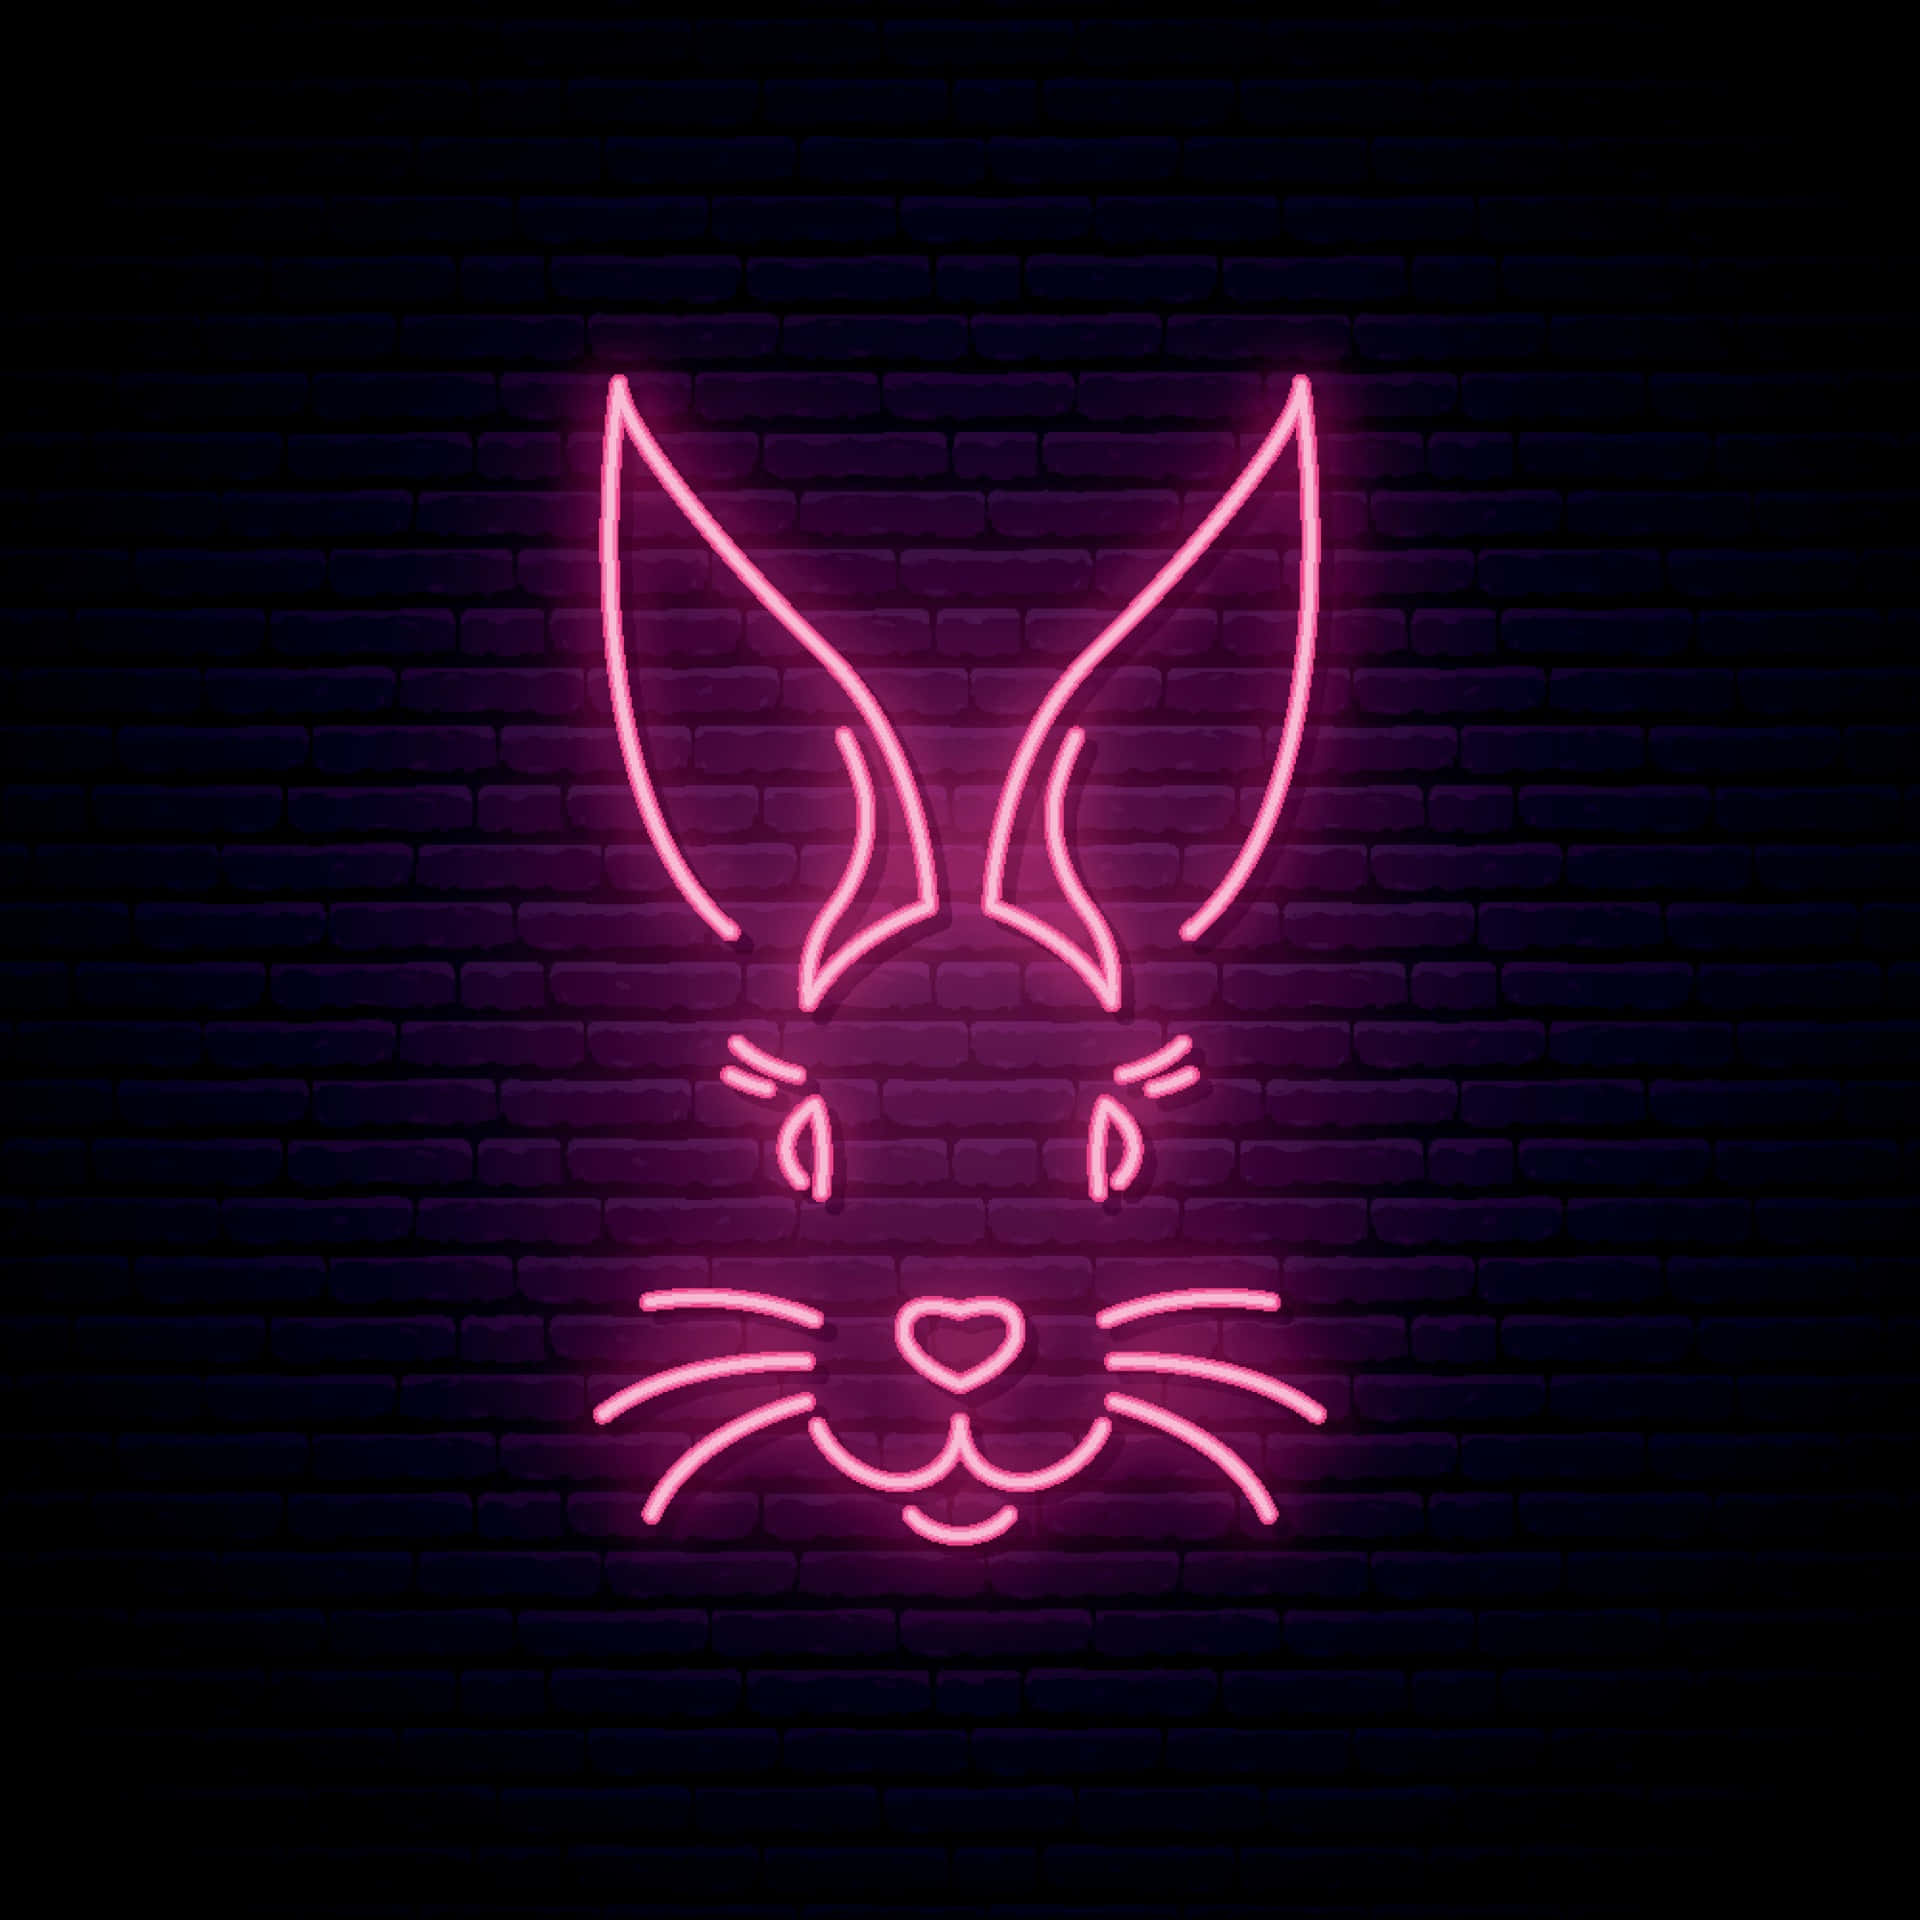 Neon Rabbit Logoon Brick Wall Wallpaper